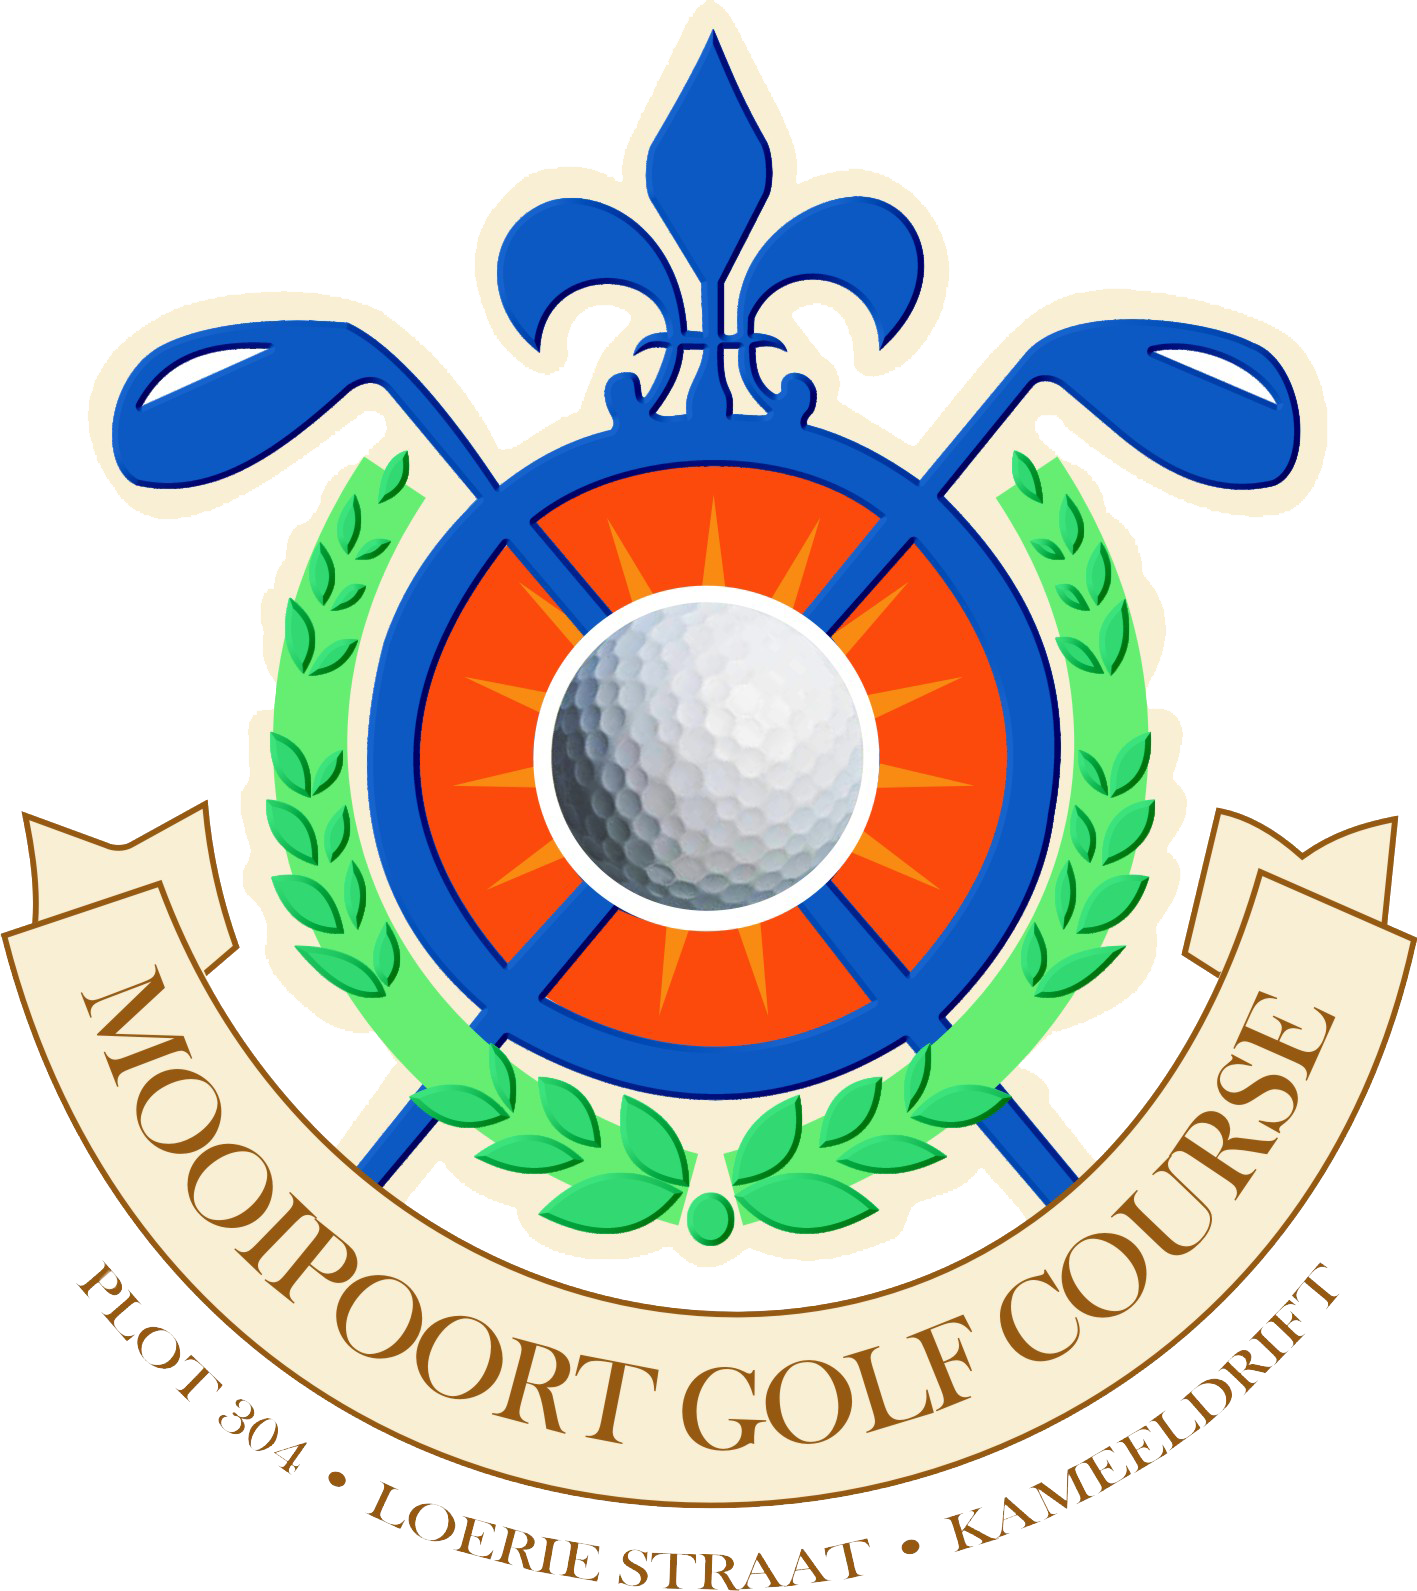 Mooipoort Golf Club